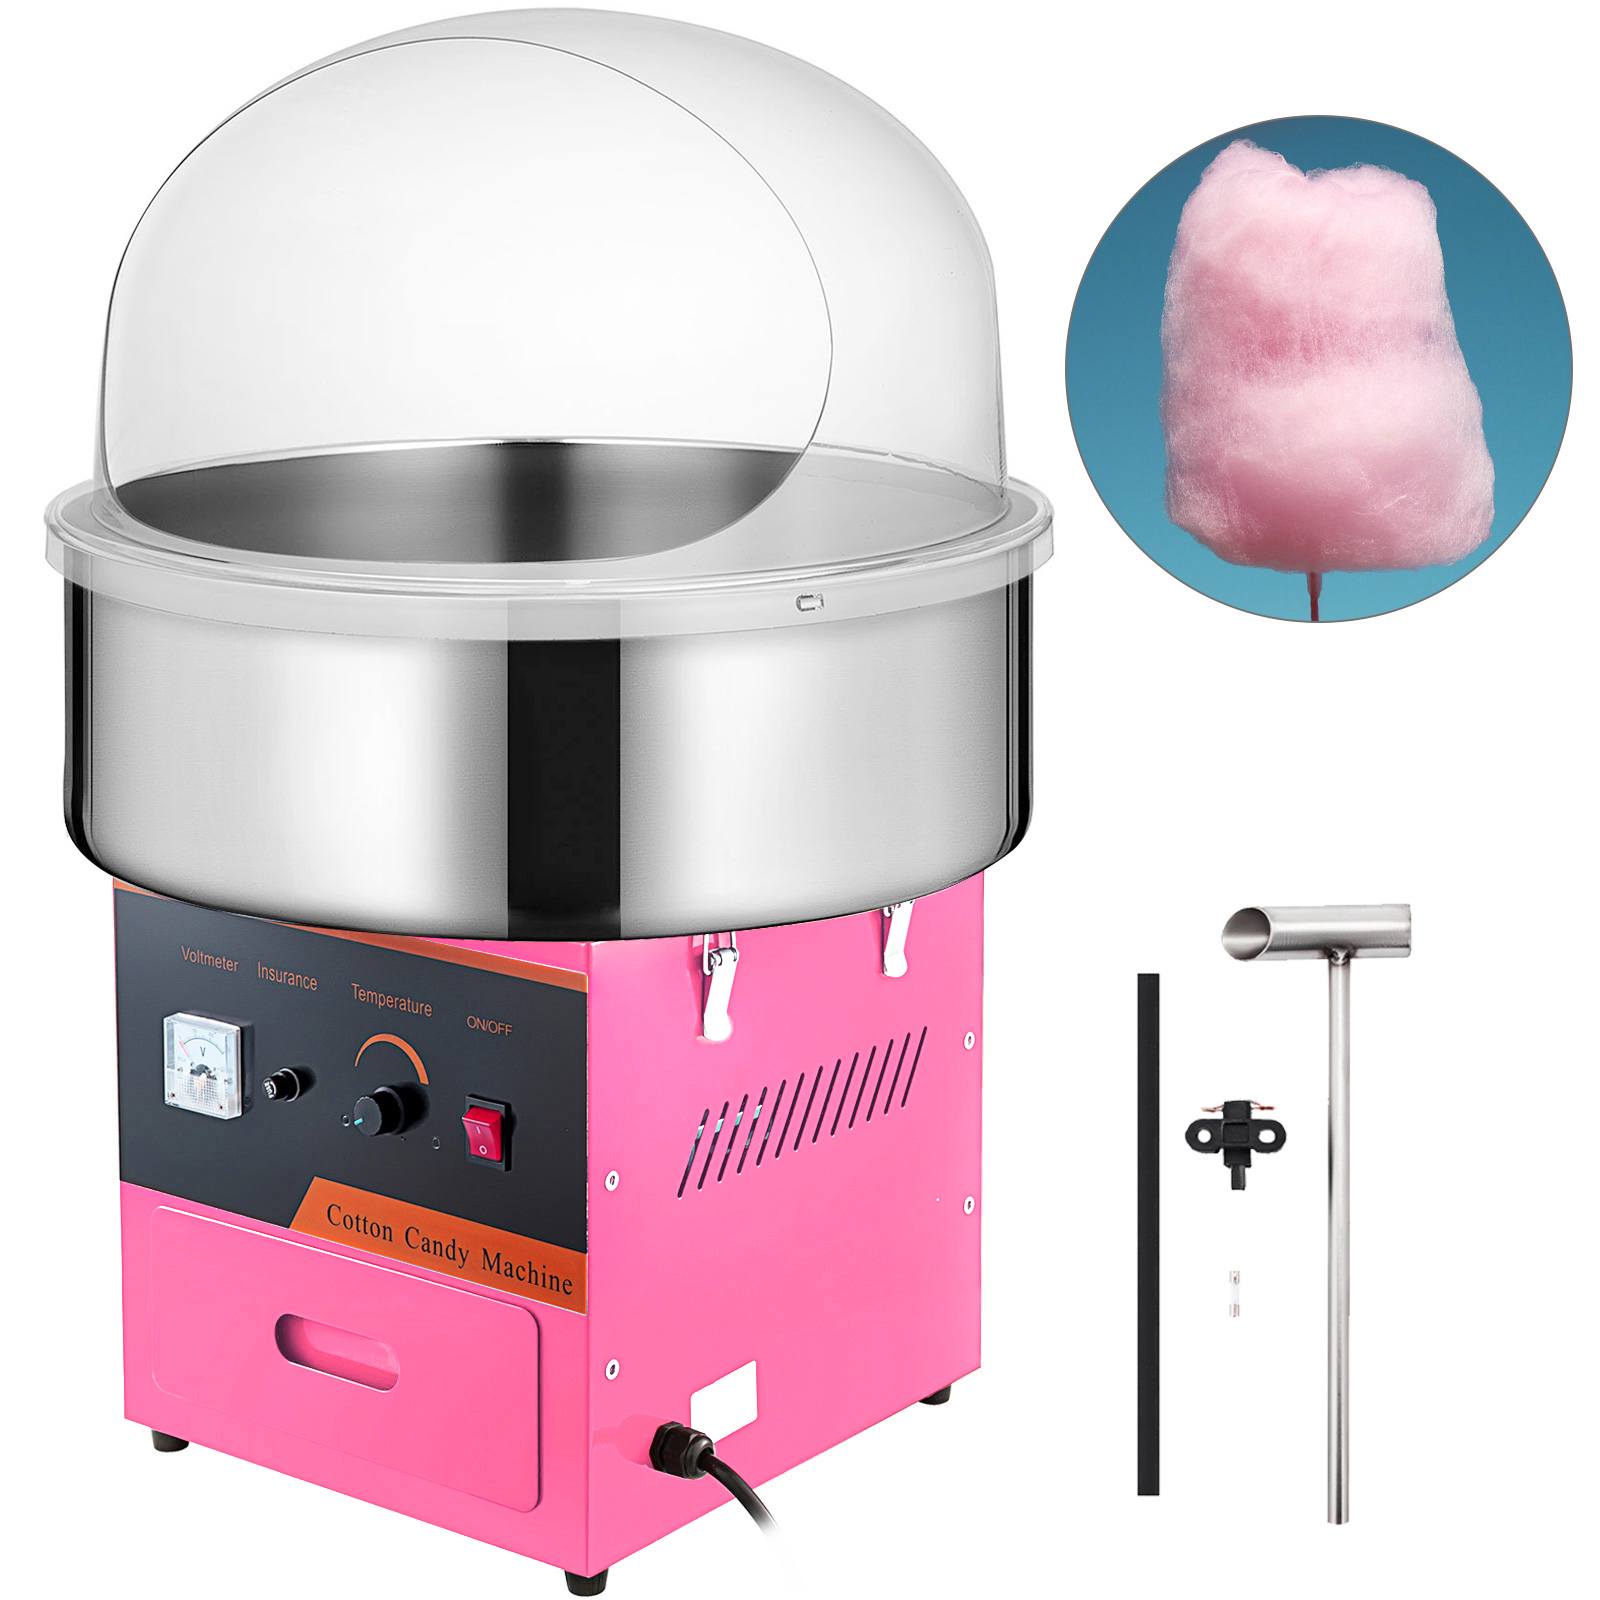 cotton candy machine,1000w, Party